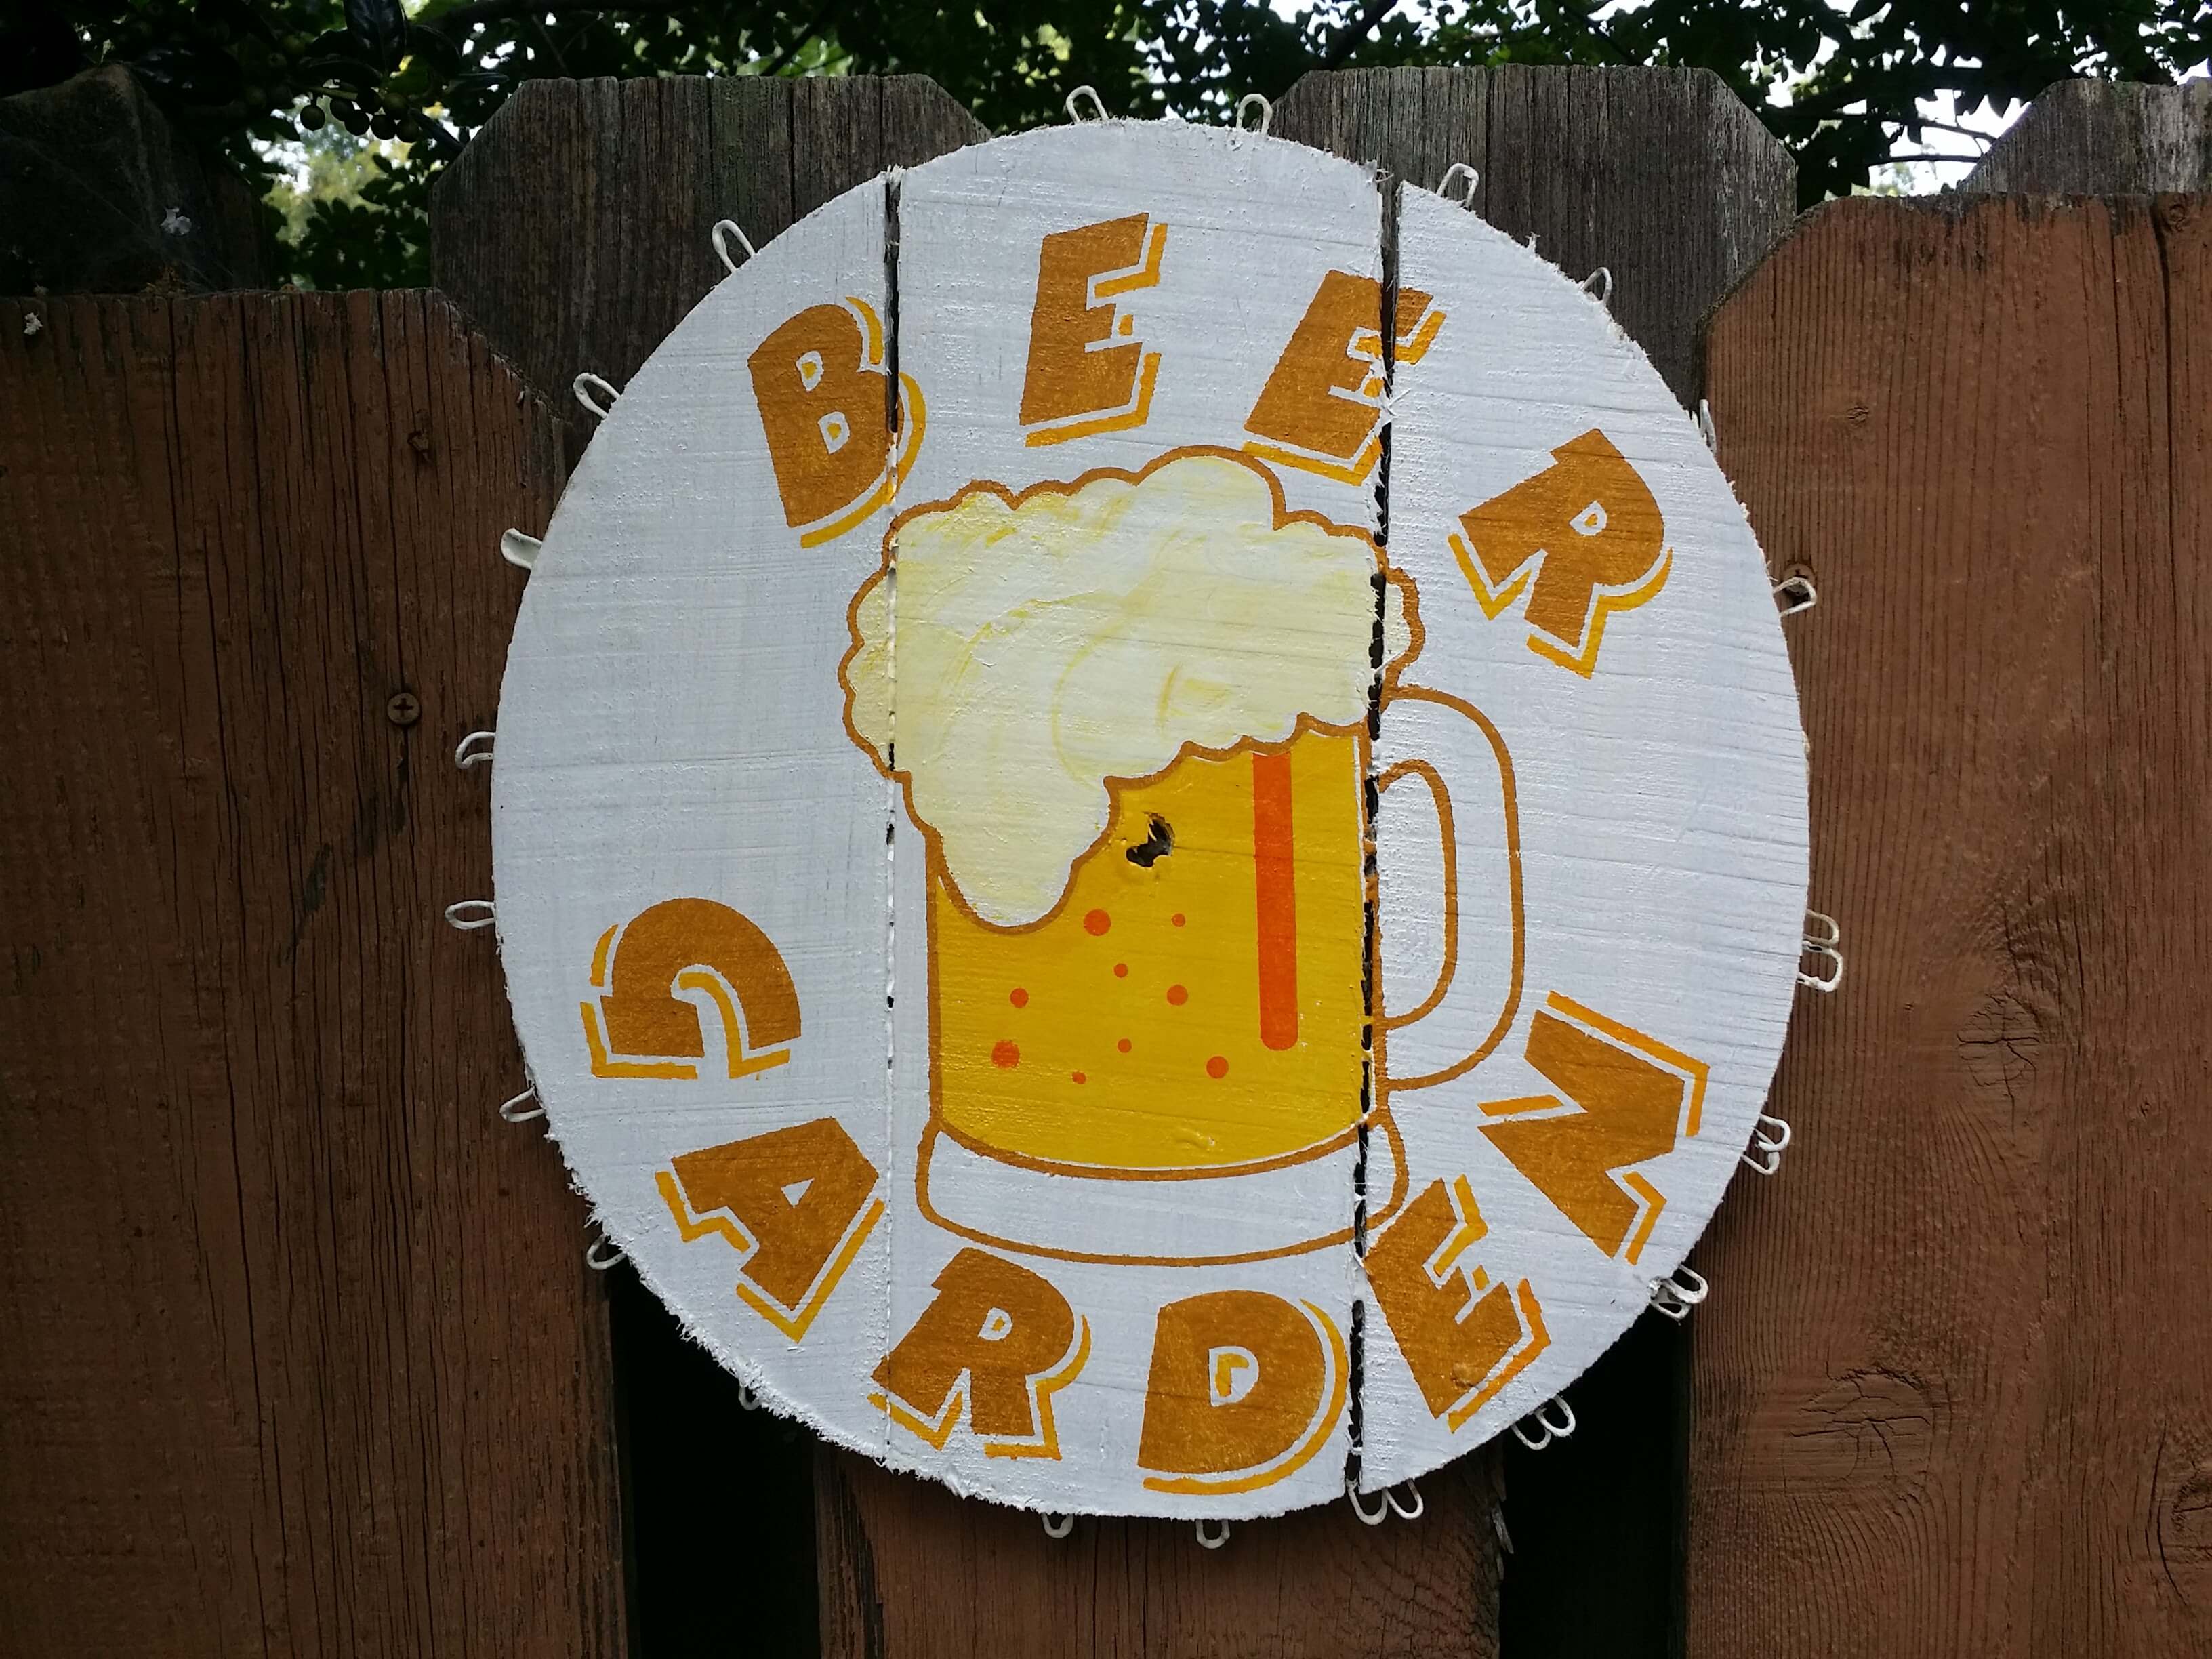 Tiki Bar Signs for your backyard Beer Garden!